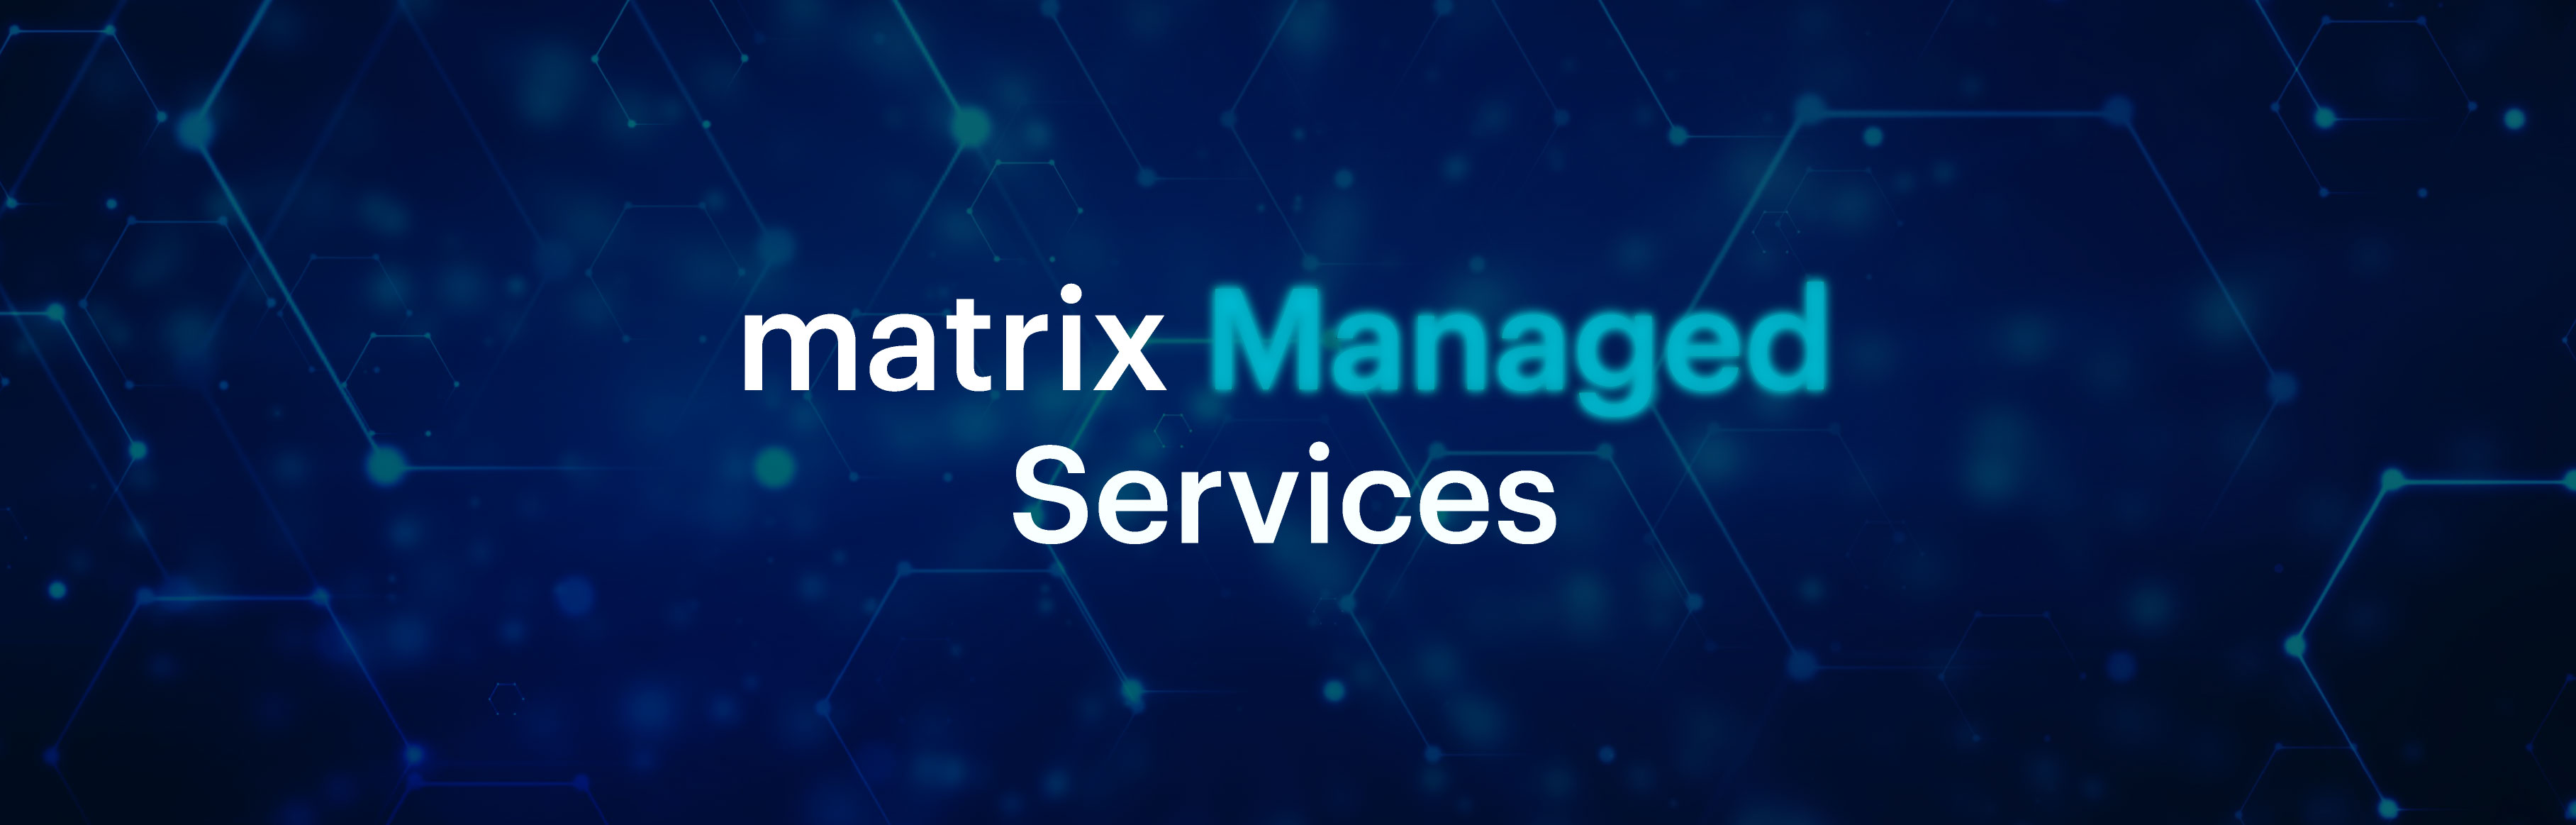 matrix Managed Services